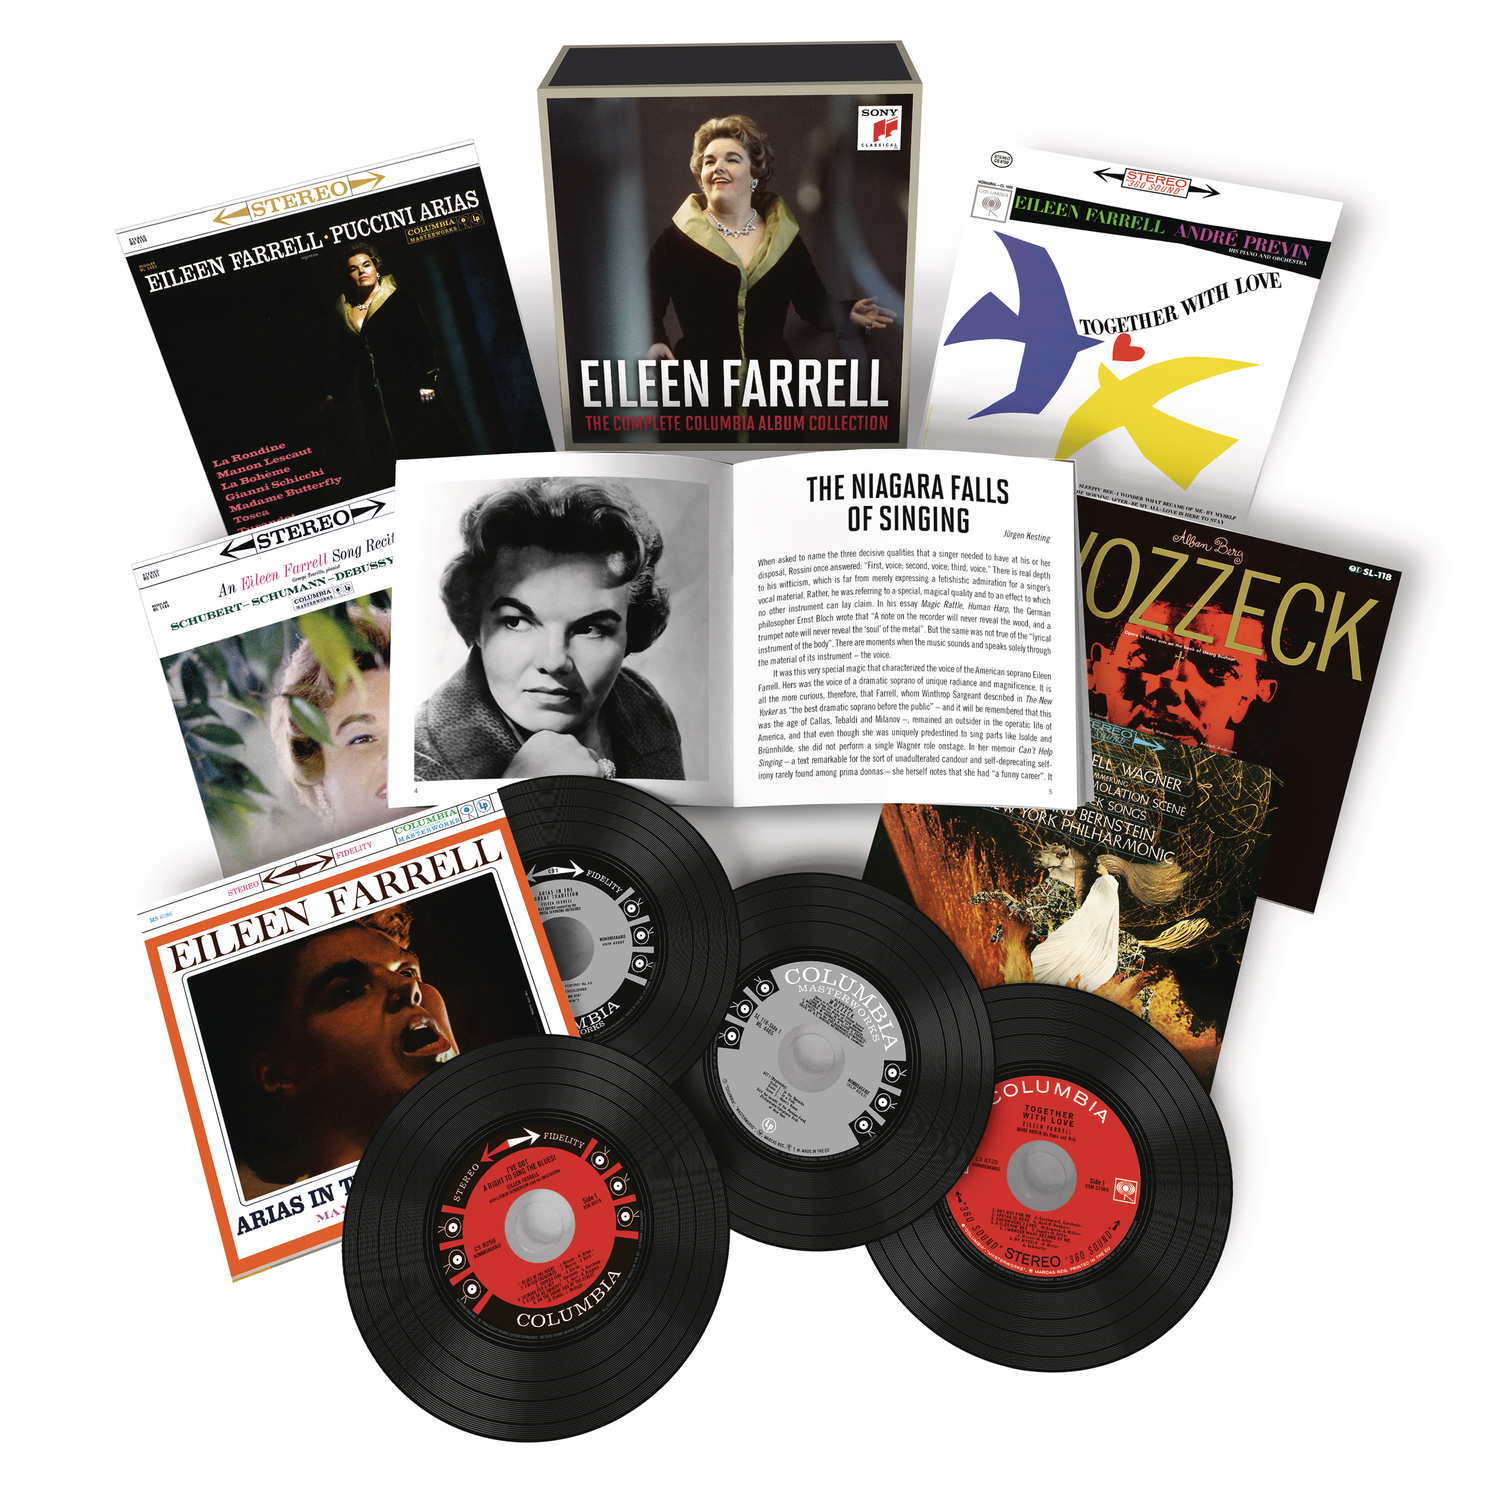 Eileen Farrell - Eileen Farrell - The Complete Columbia Album Collection